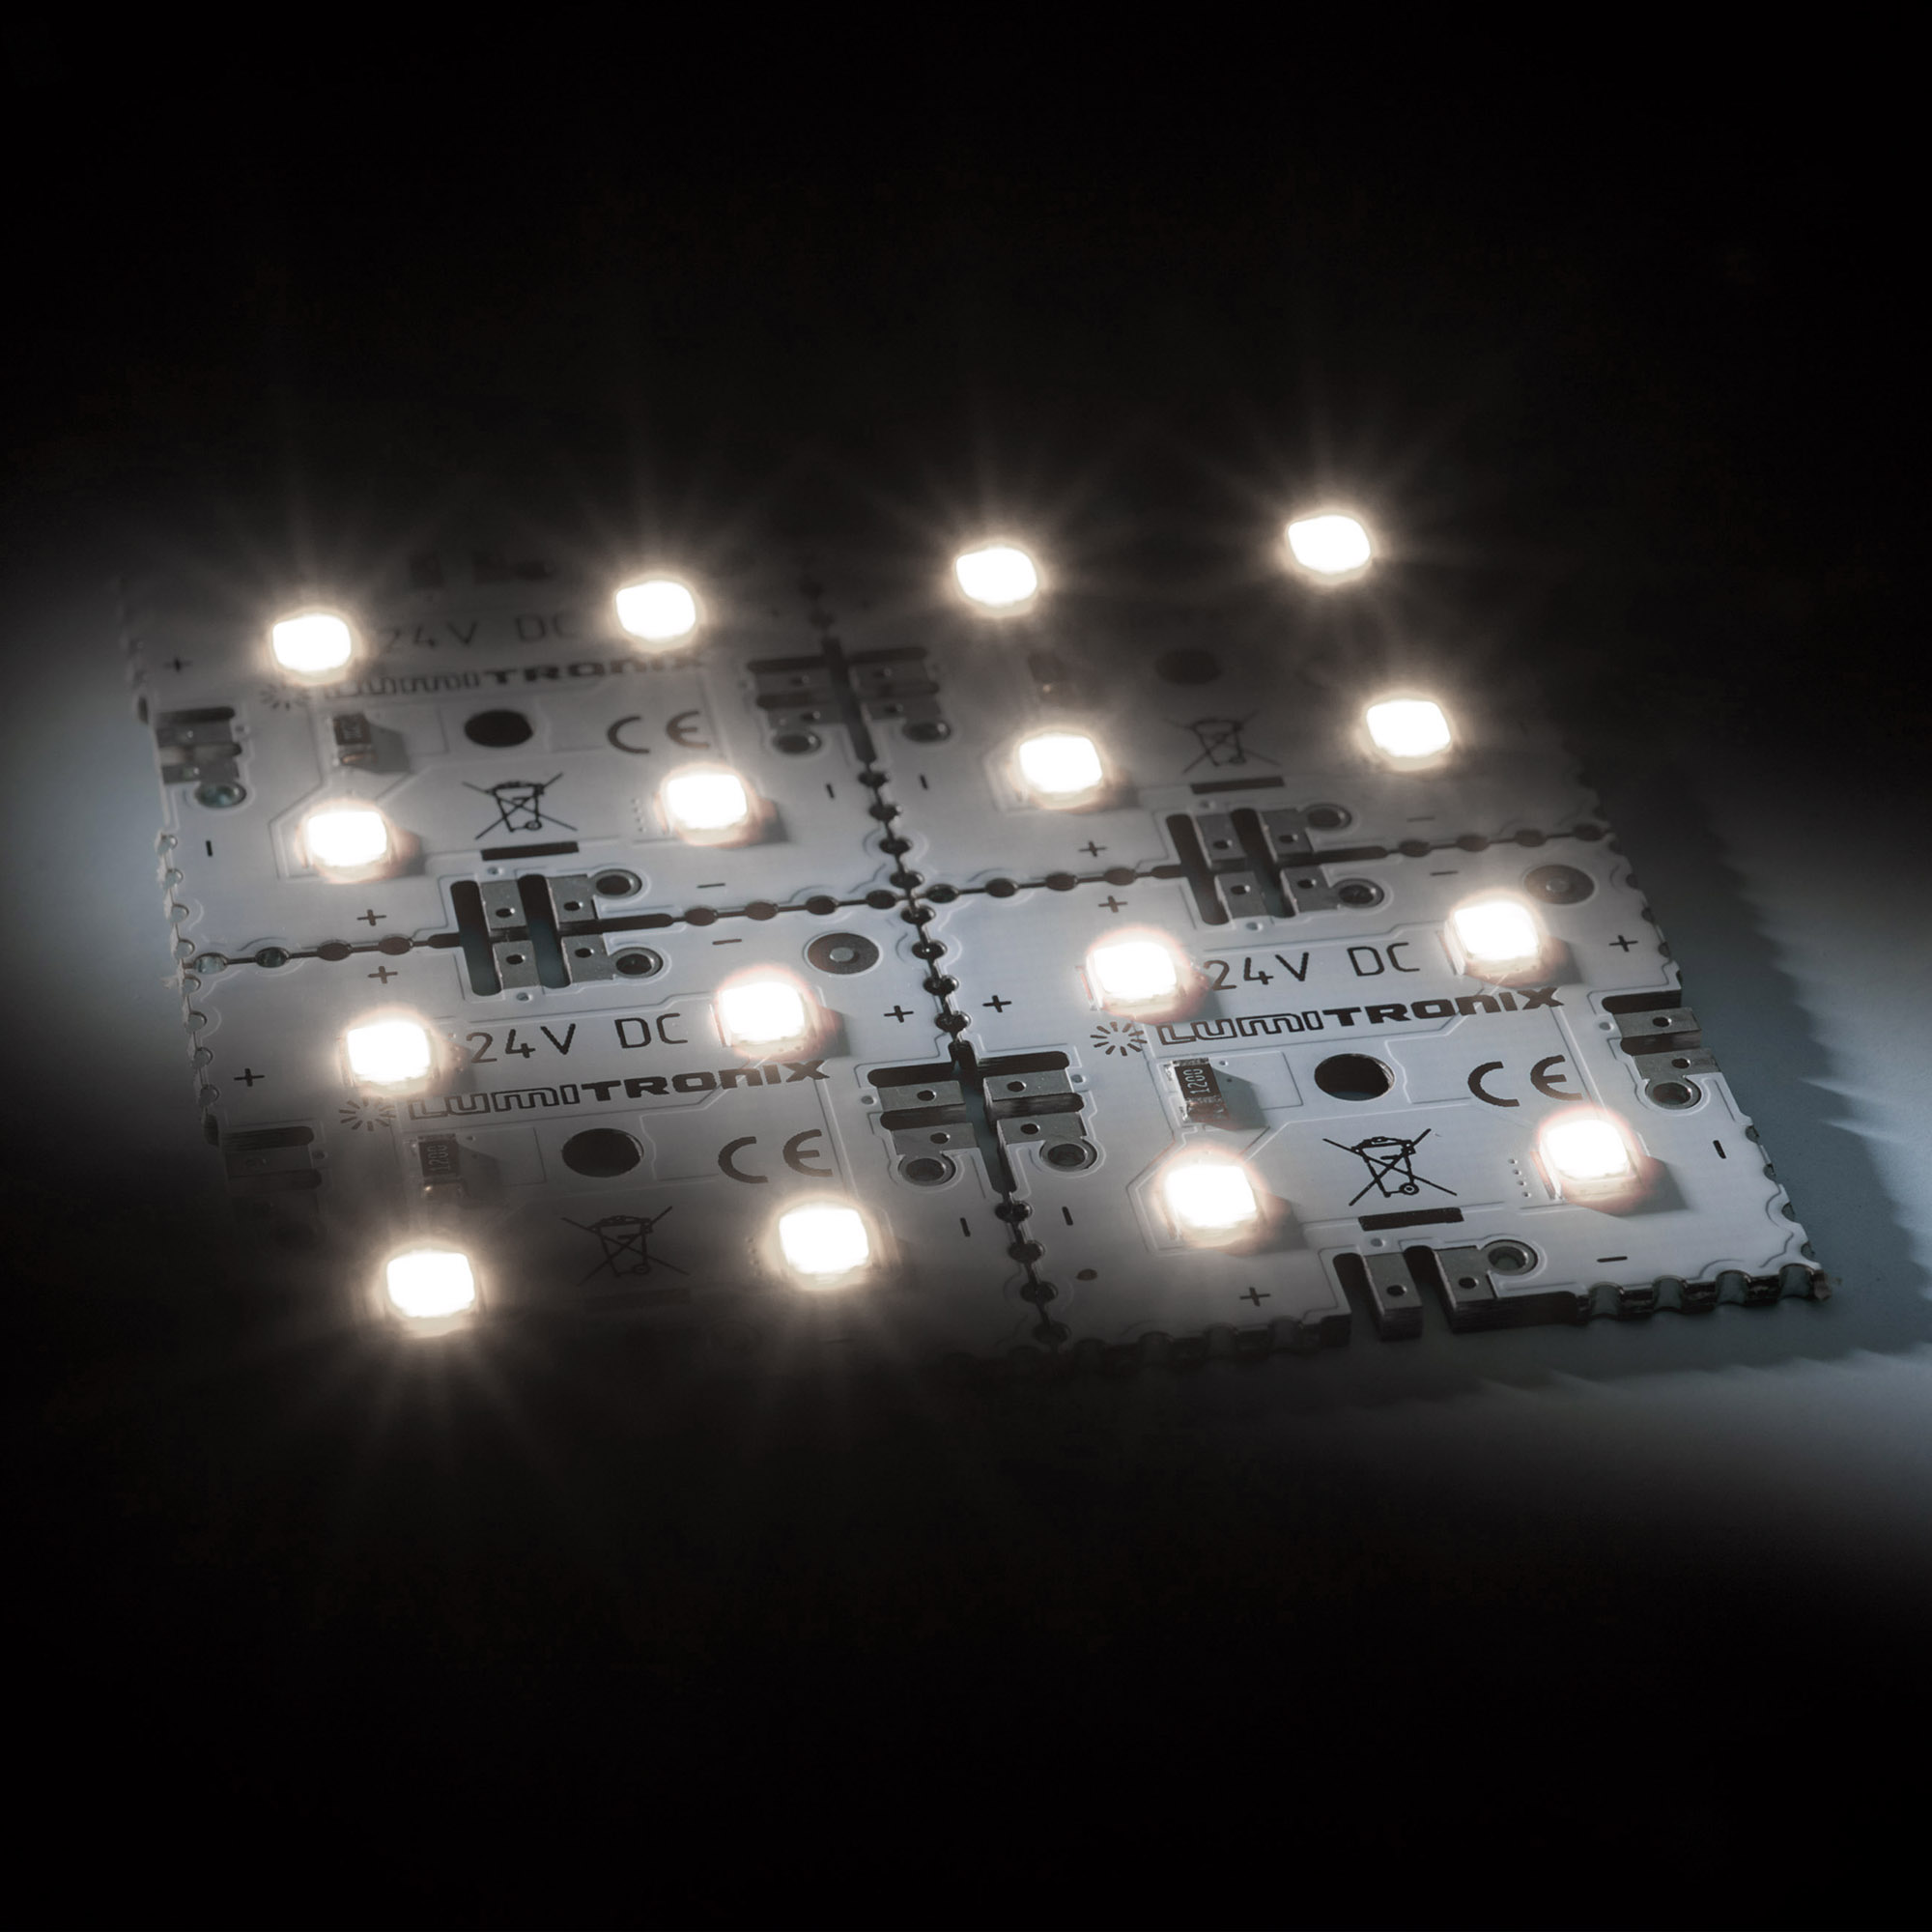 MatrixMini-4-4080 Nichia LED Module (2x2) pure white 4000K 300lm 16 LEDs 24V 1.92W 6x6cm (83000 lm/sqm)